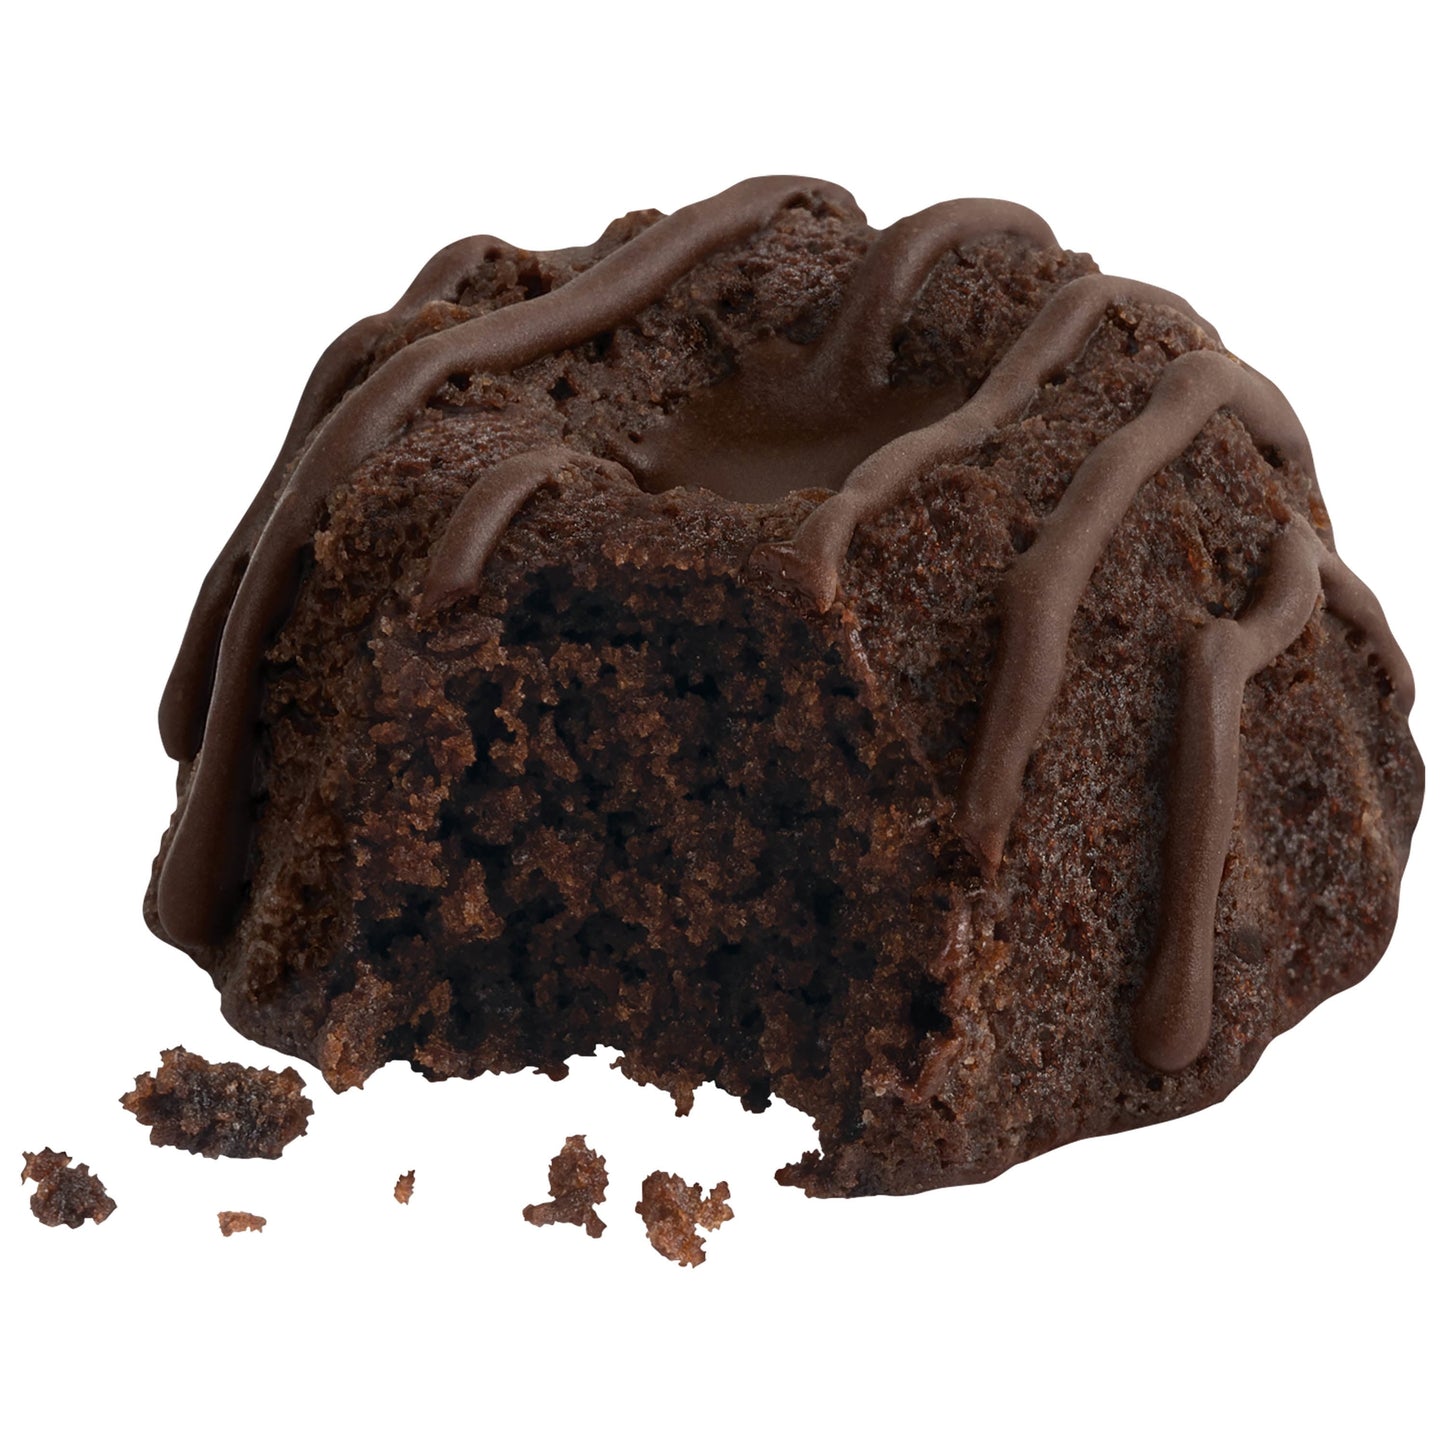 HOSTESS Chocolate Drizzle Baby Bundts, Mini Chocolate Bundt Cakes - 10 oz, 8 Count